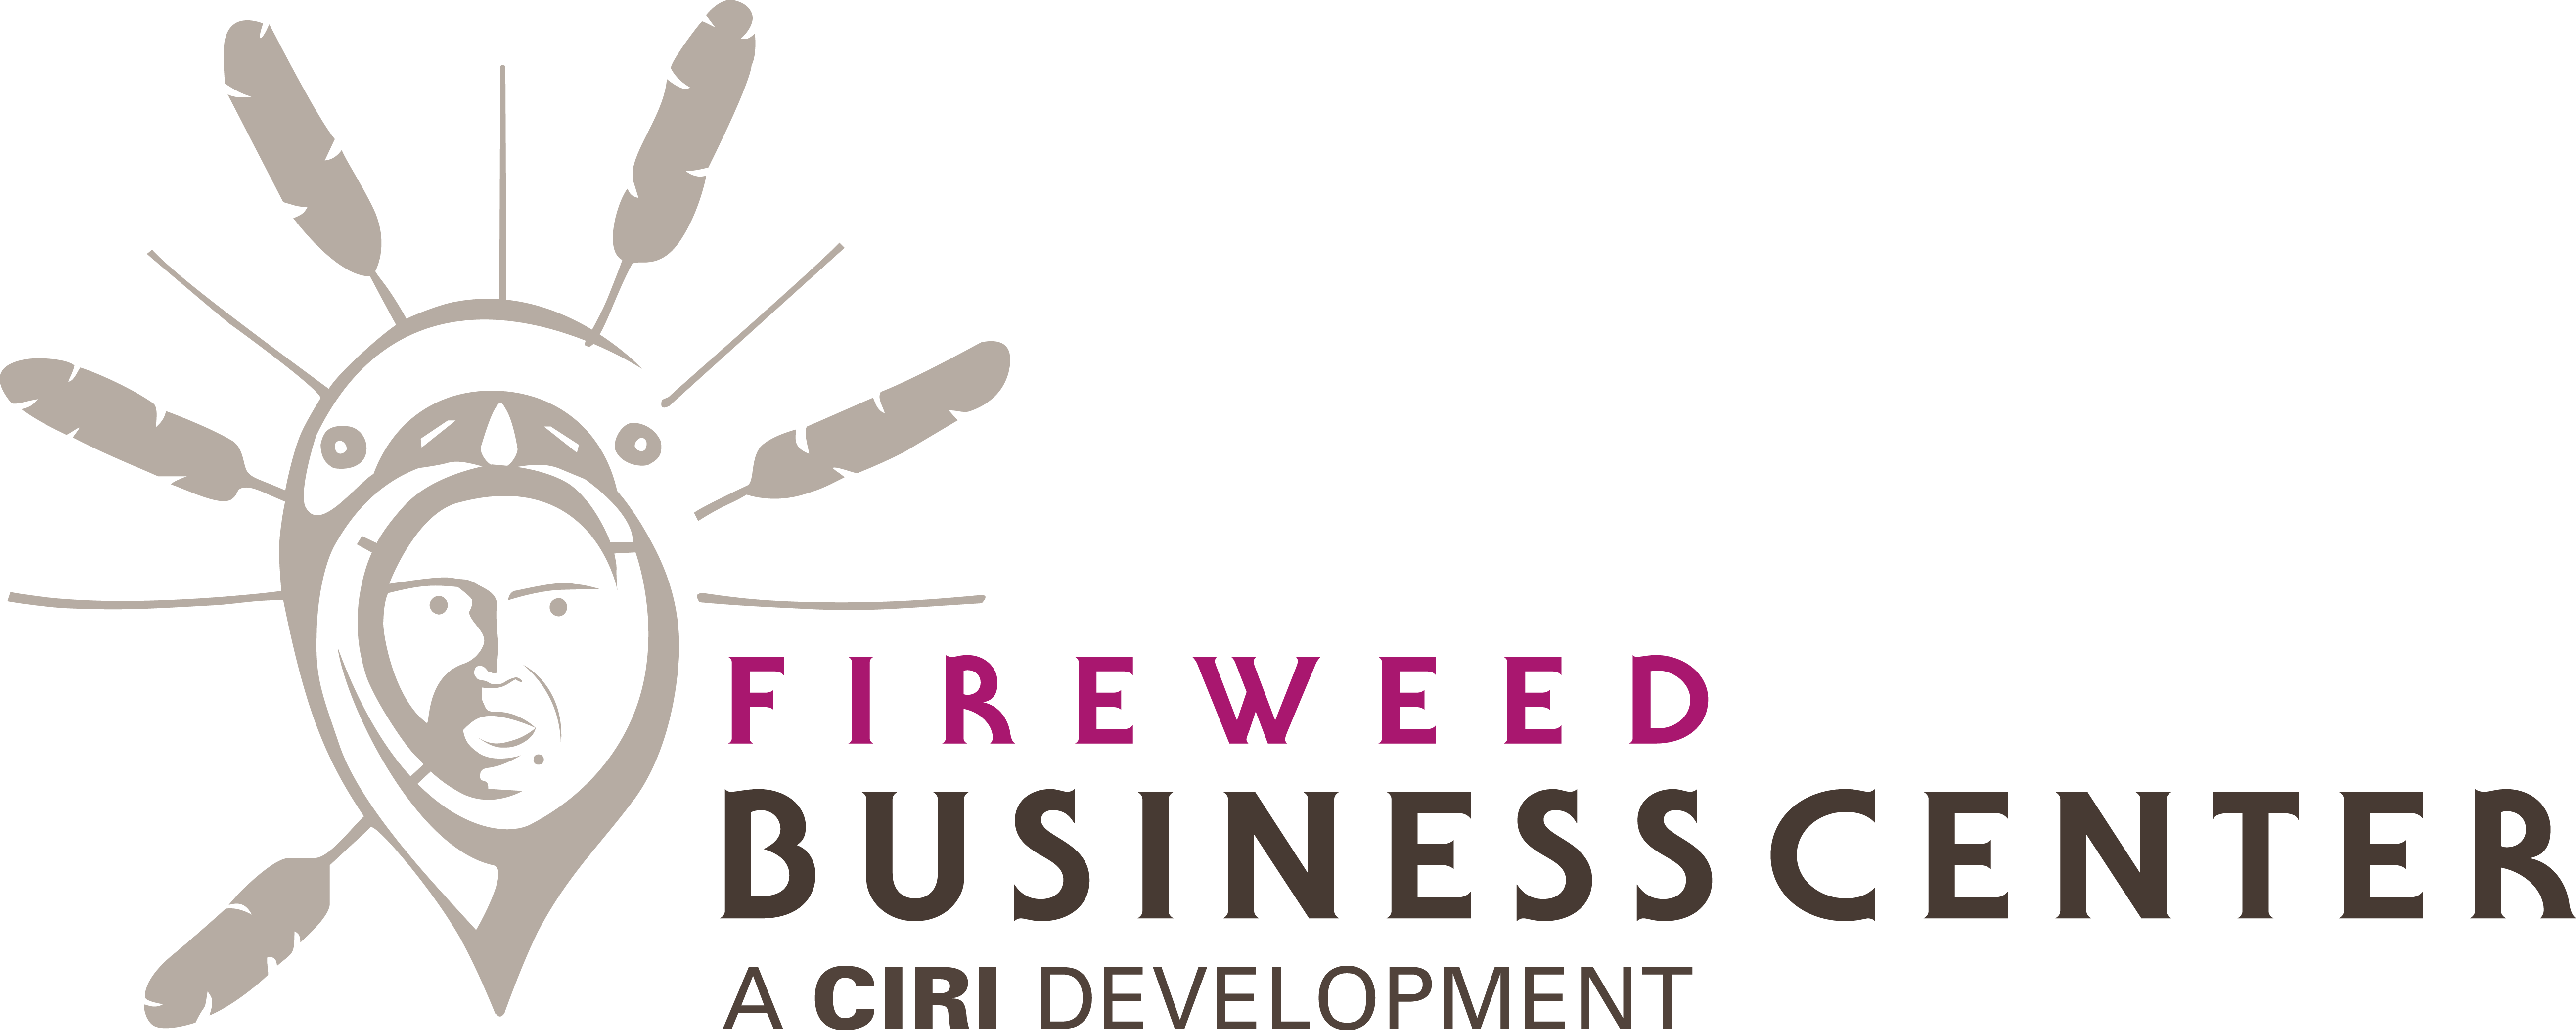 Fireweed Business Center